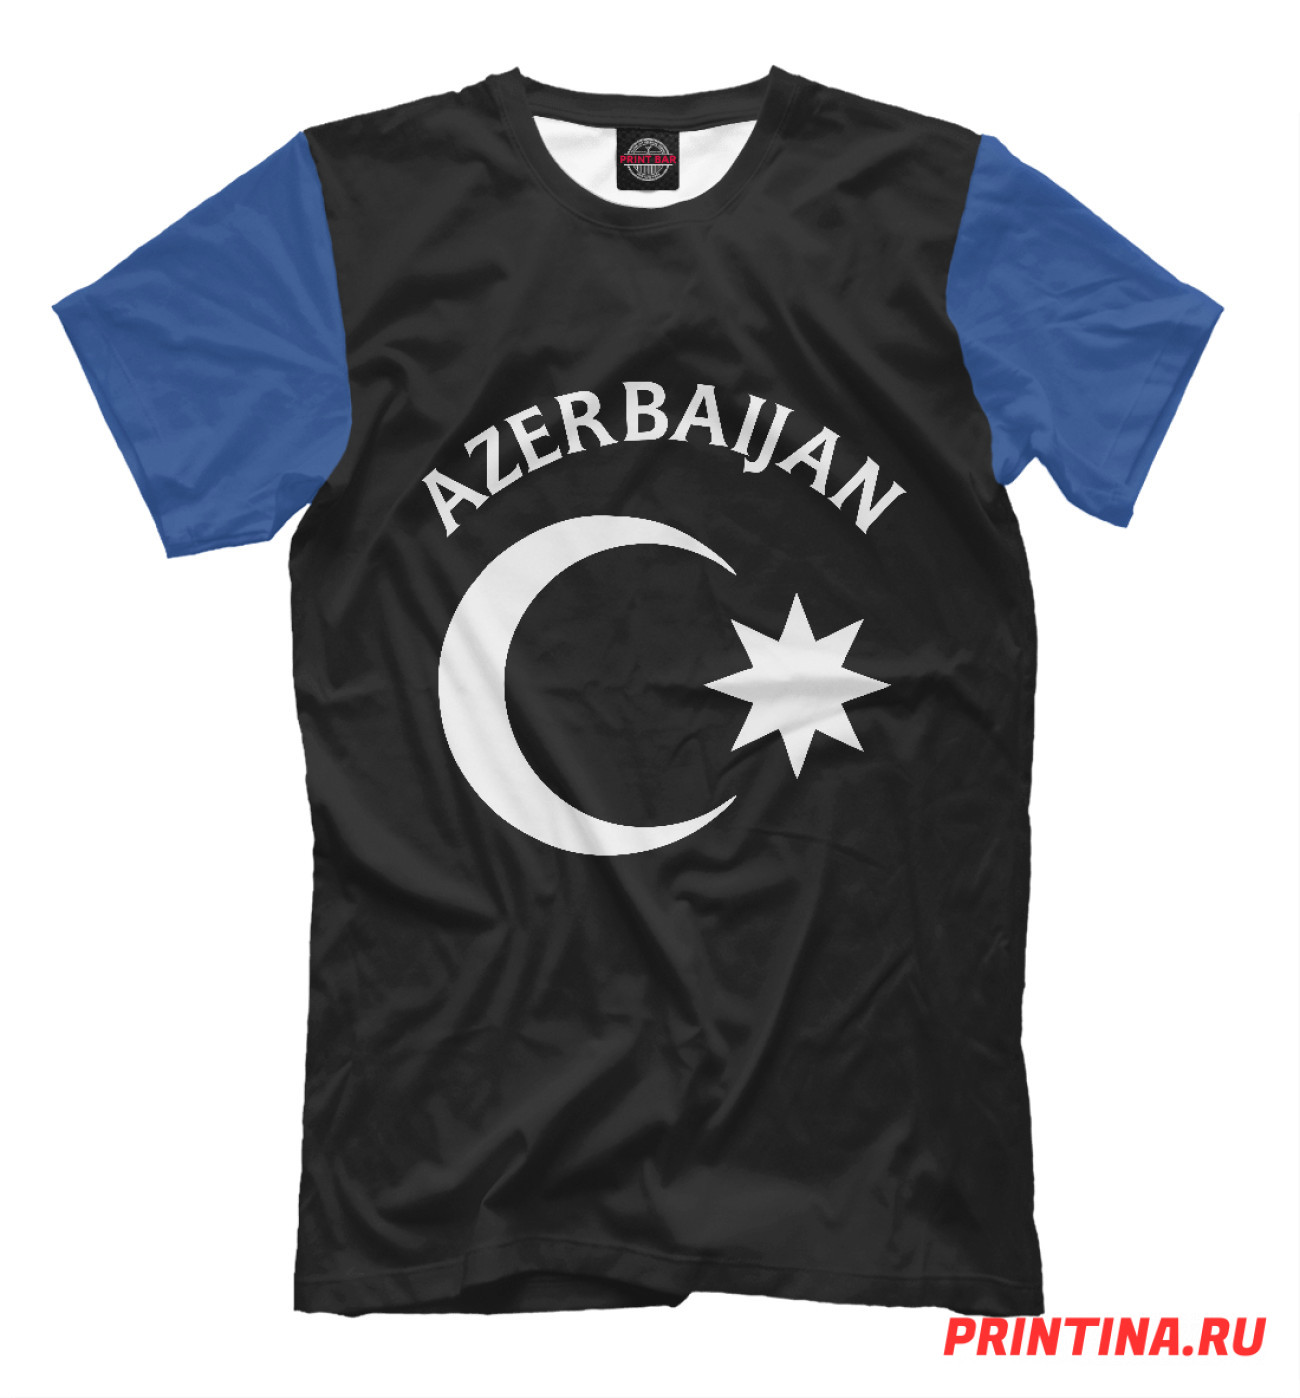 Мужская Футболка Азербайджан, артикул: AZR-189863-fut-2